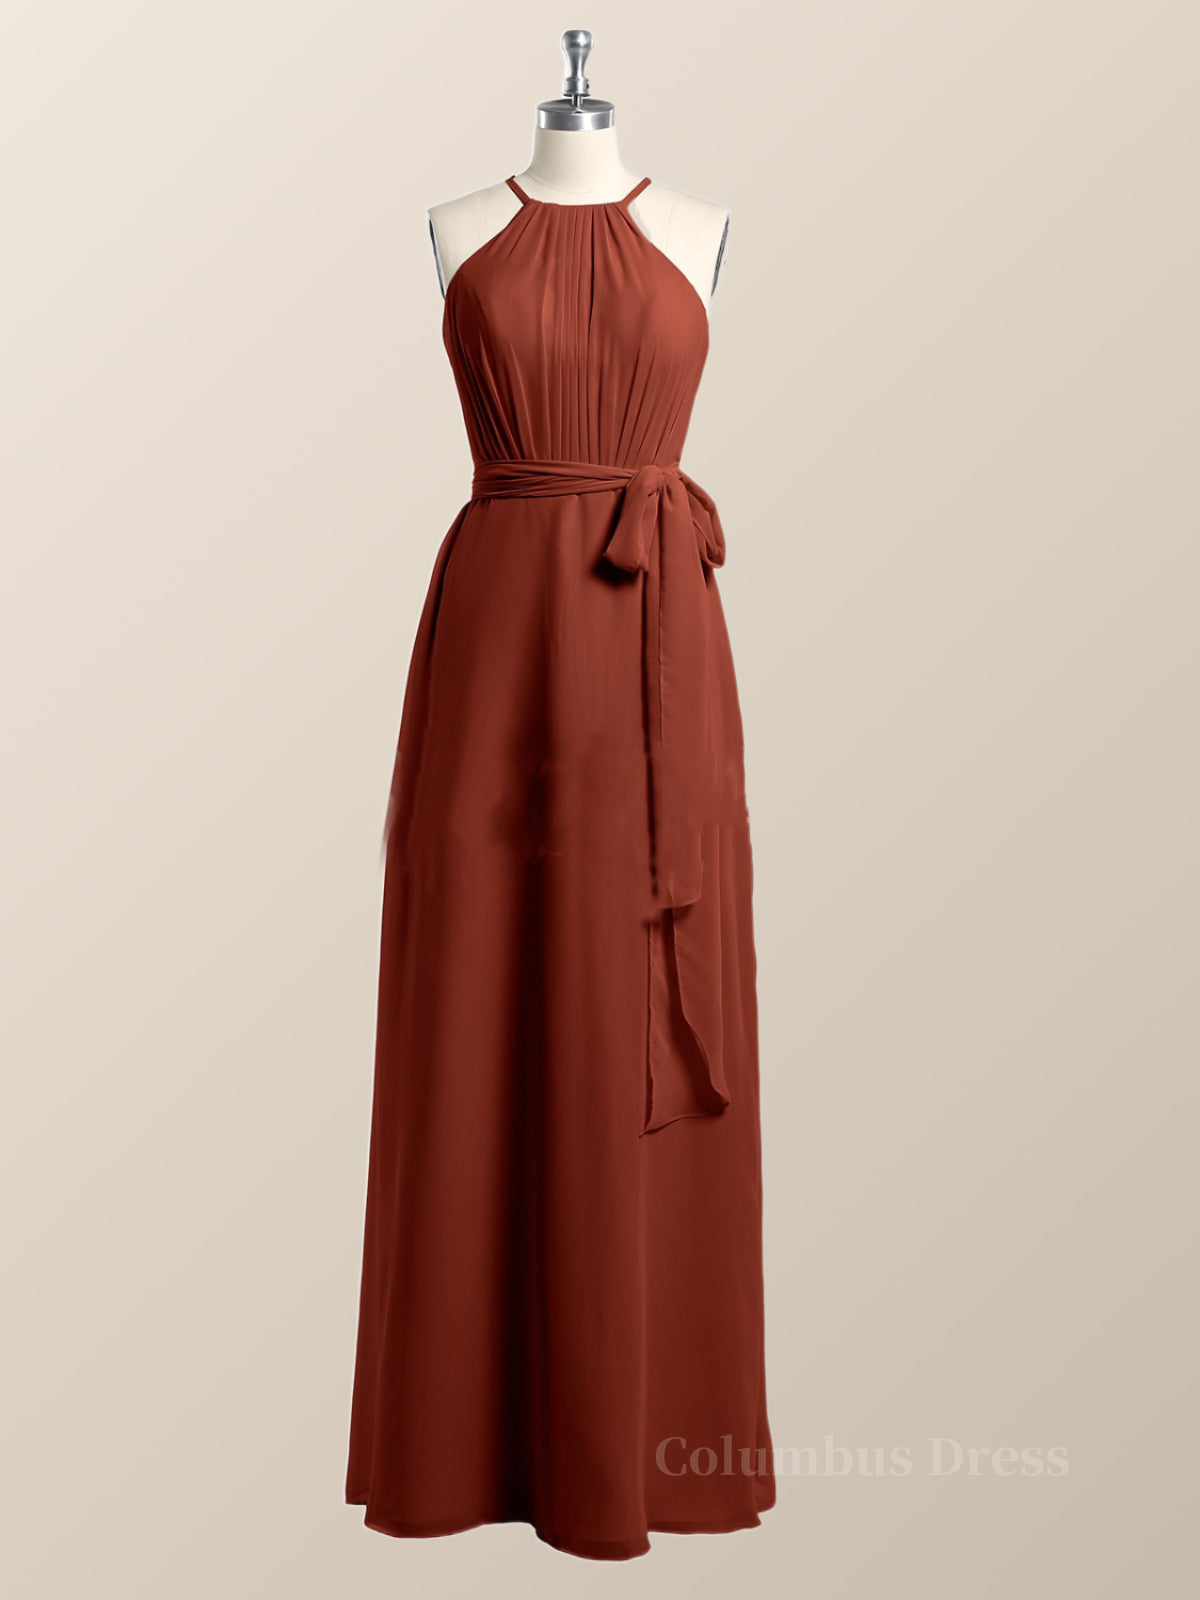 Halter Burgundy Chiffon A-line Long Corset Bridesmaid Dress outfit, Formal Dresses Fall